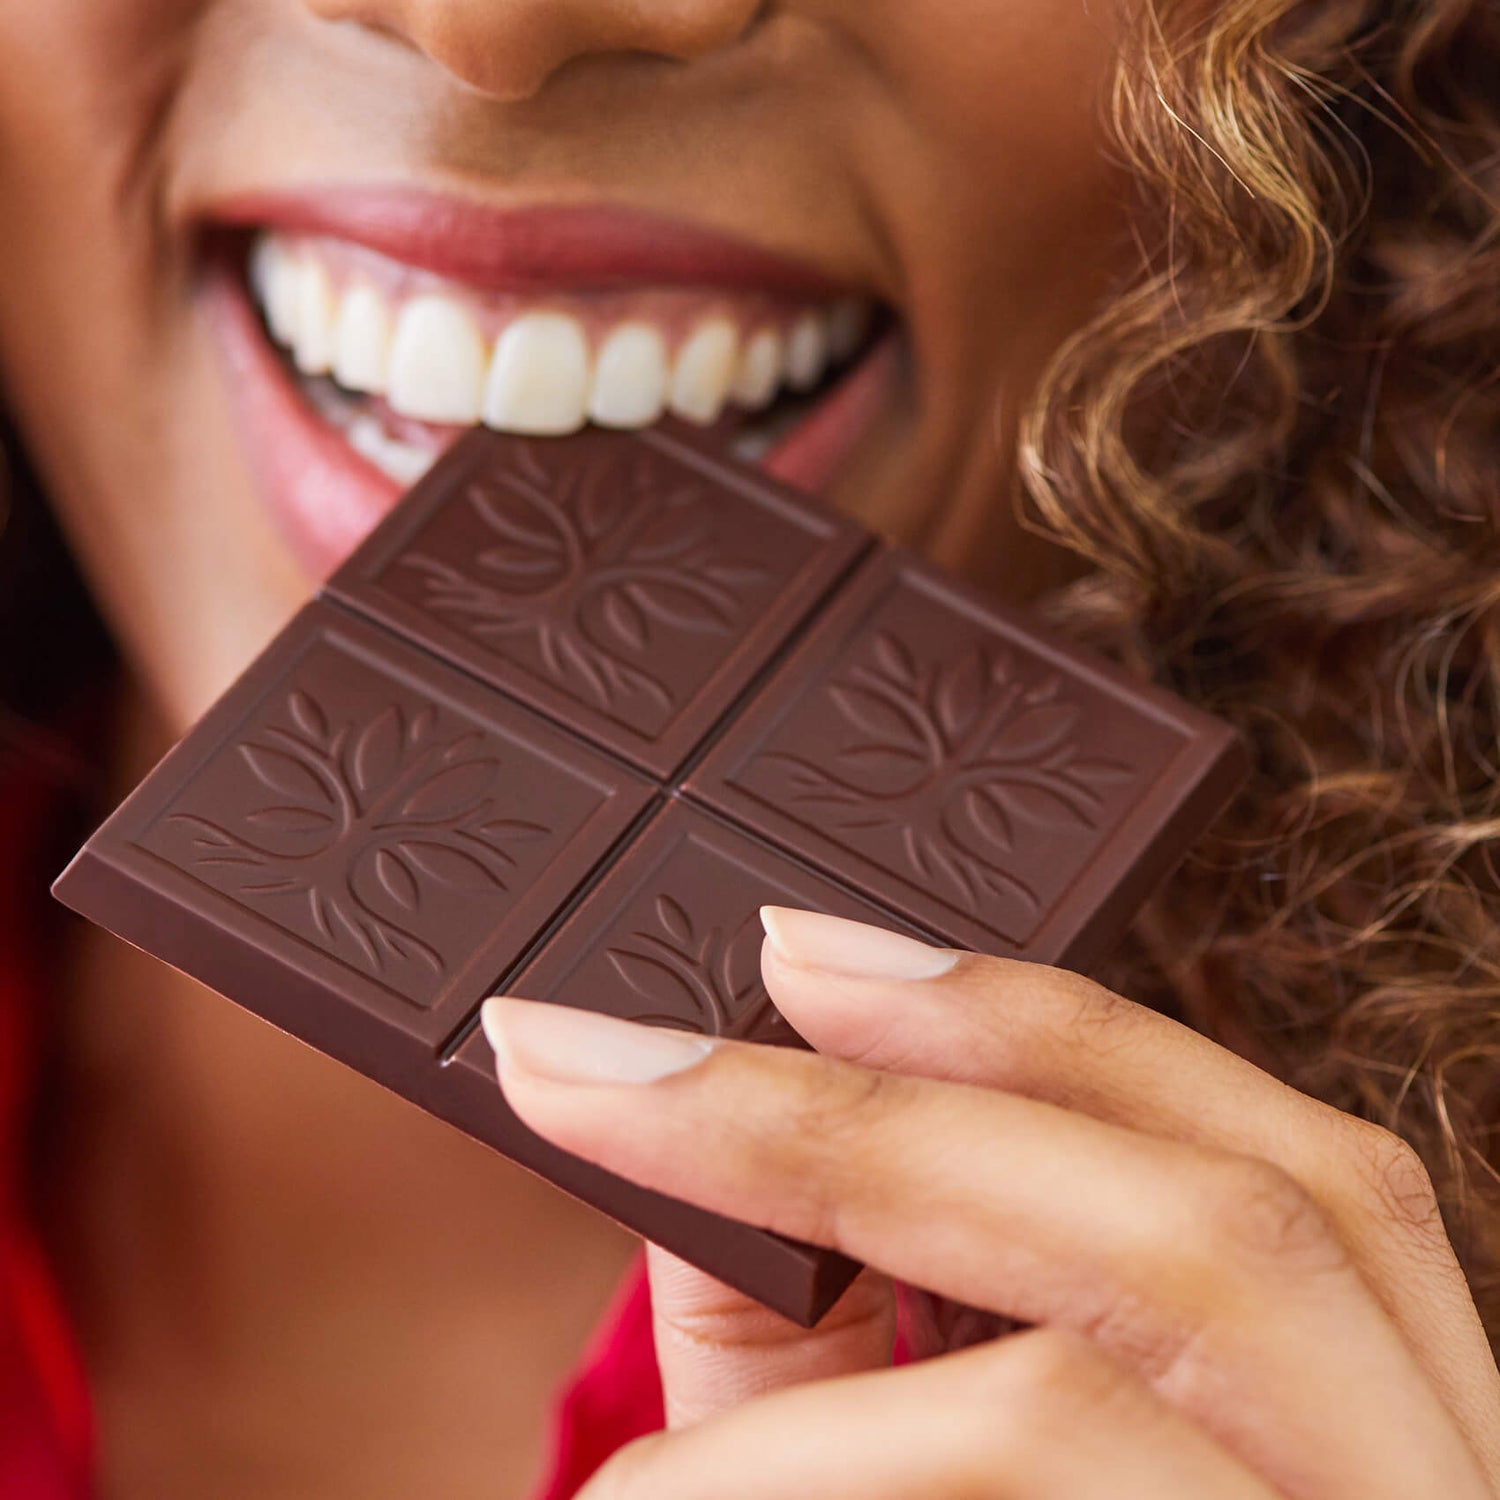 Woman Eating an AMERICAN HERITAGE Chocolate Tablet Bar